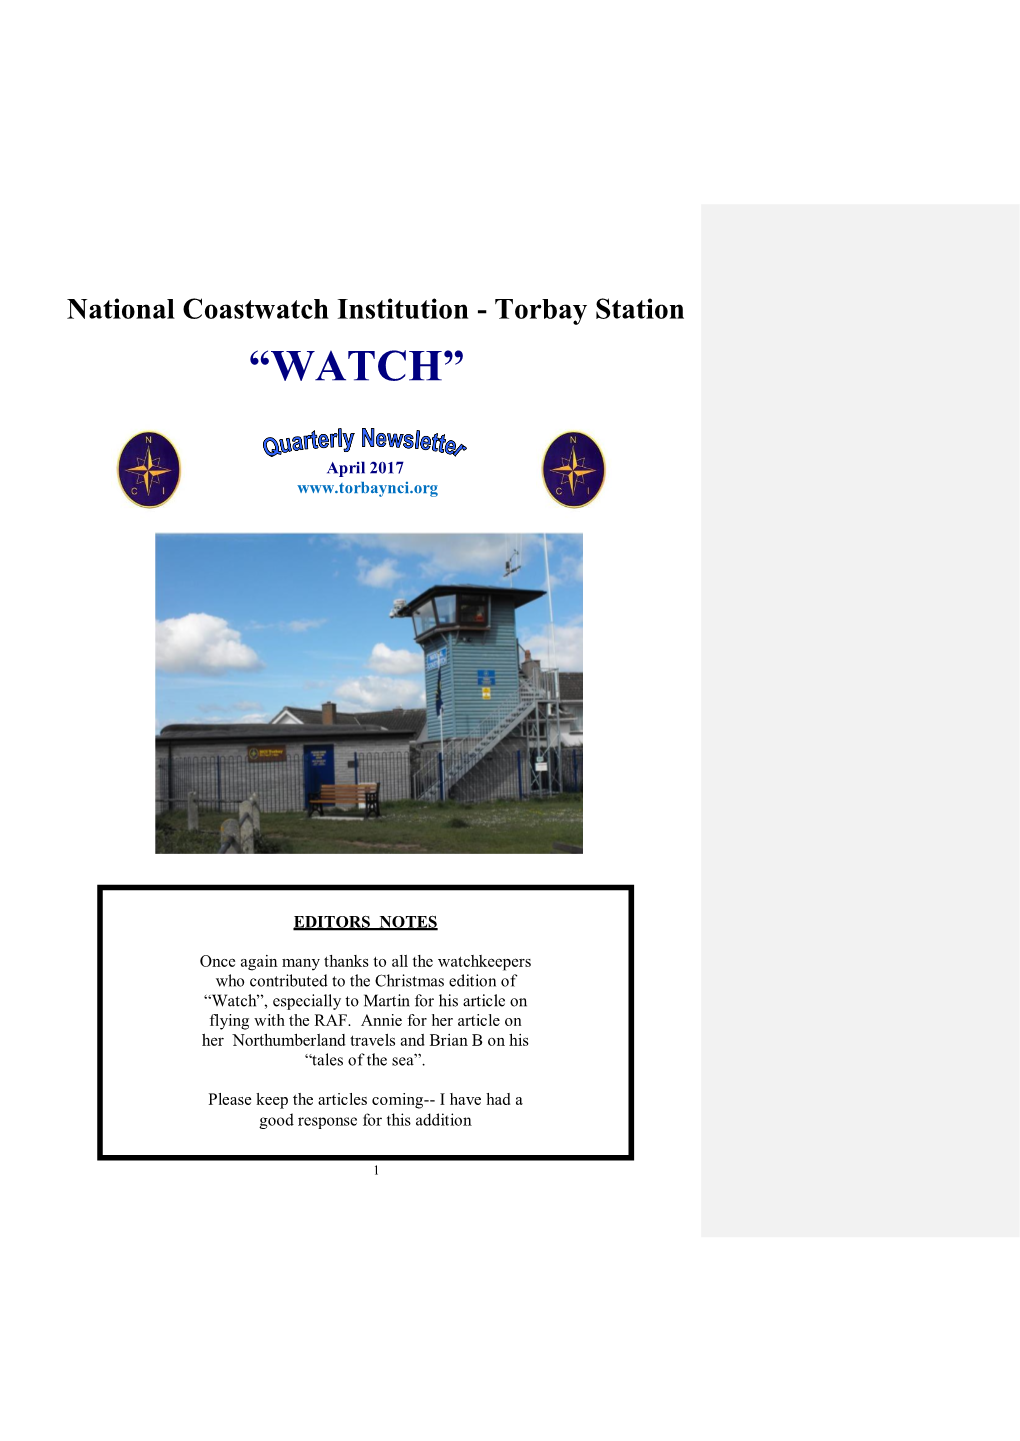 National Coastwatch Institution - Torbay Station “WATCH”